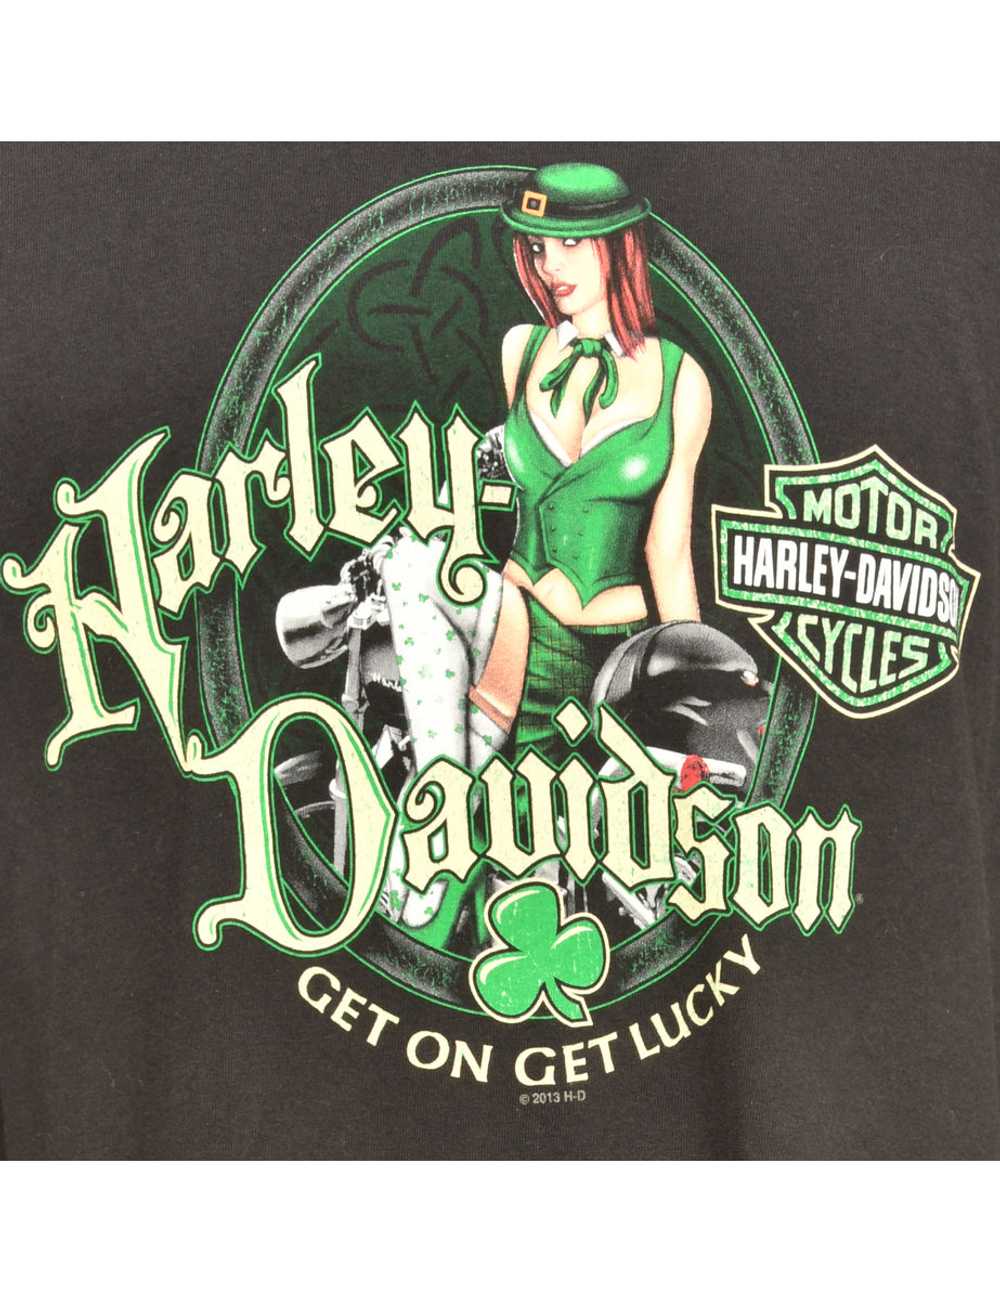 Harley Davidson Printed T-shirt - M - image 3